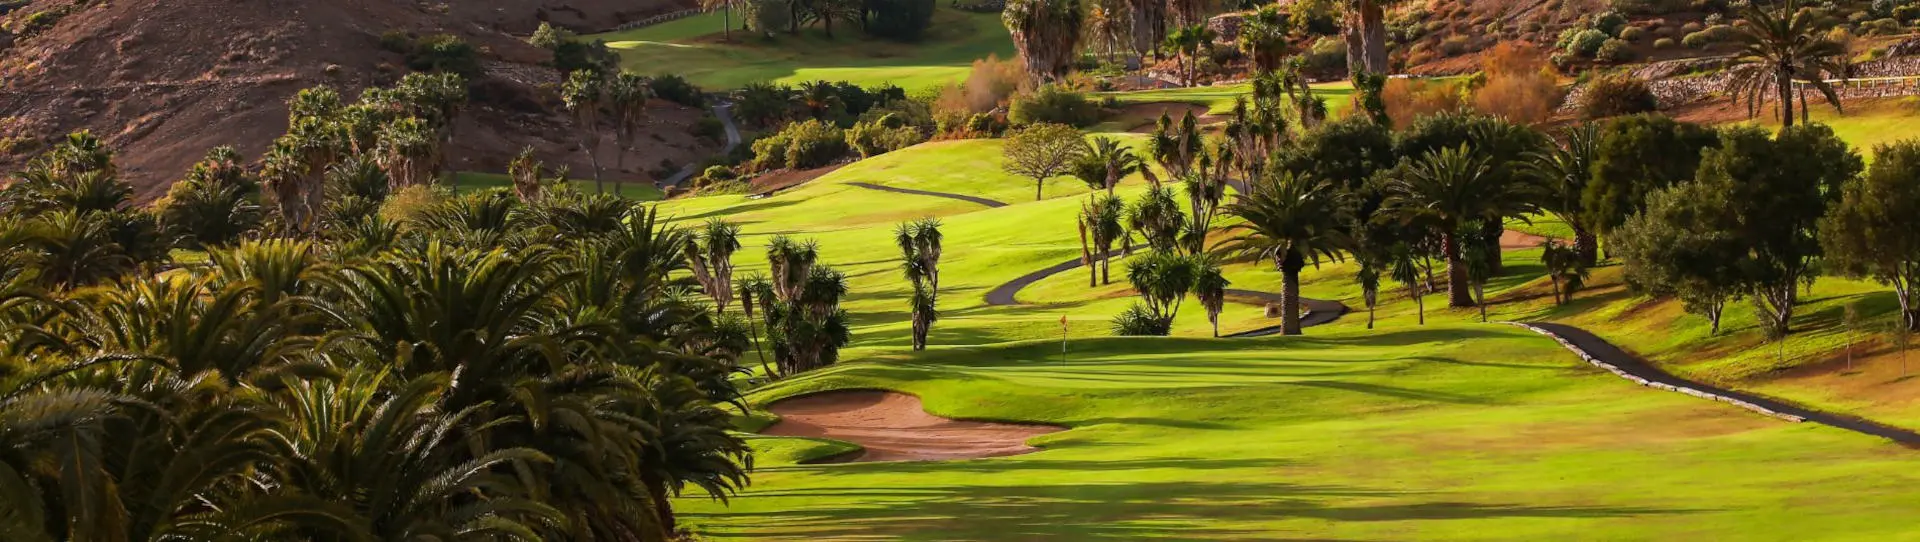 Spain golf courses - Salobre Golf Old Course - Photo 3